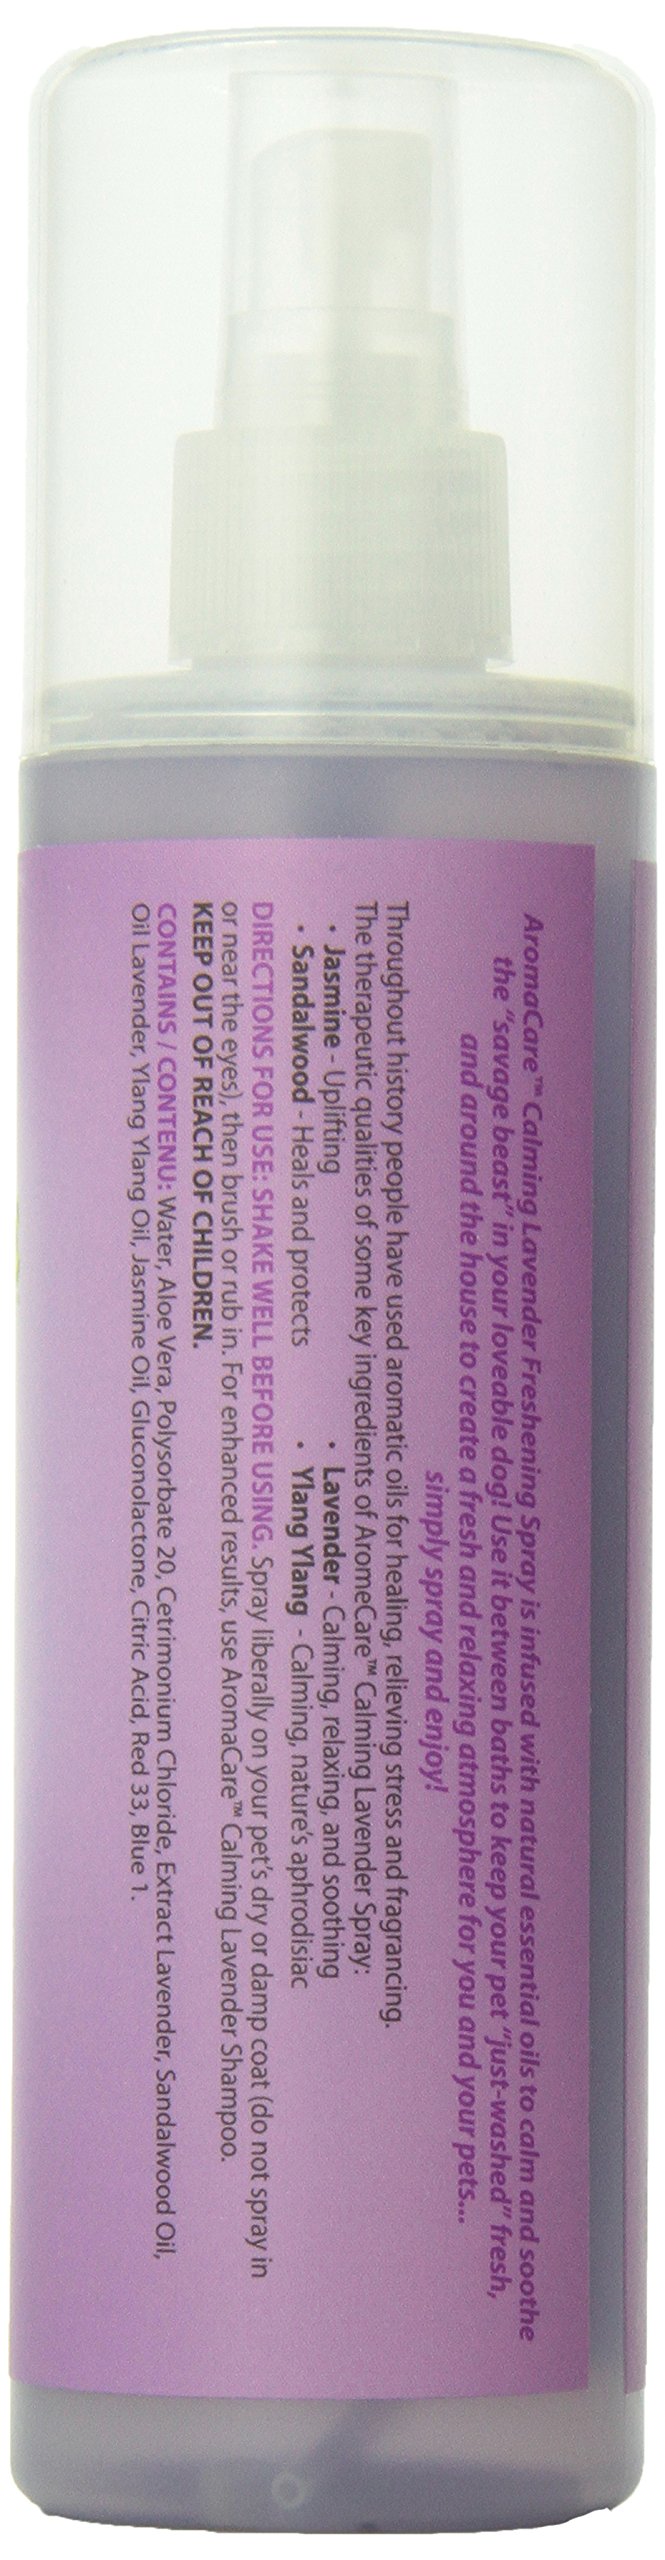 [Australia] - PPP Pet Aroma Care Calming Lavender Spray, 8-Ounce 